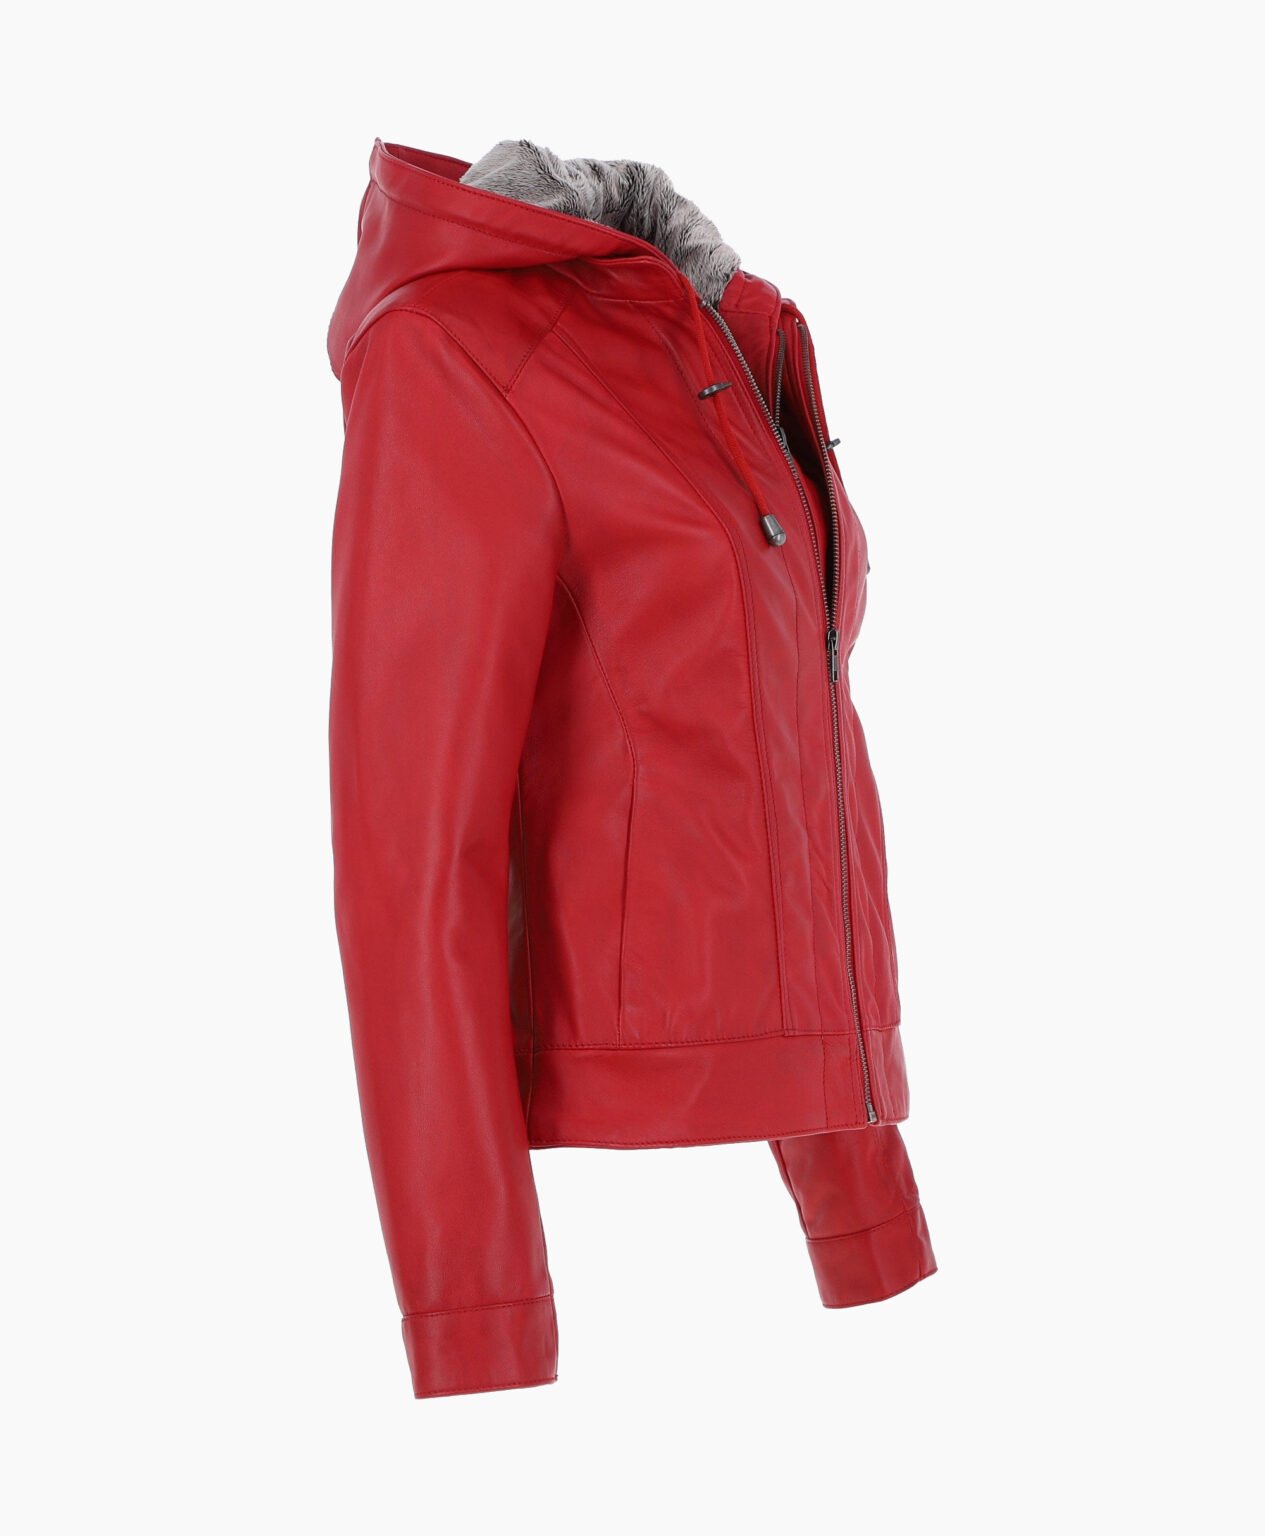 vogue-jacket-leather-hooded-jacket-red-sarasota-image203